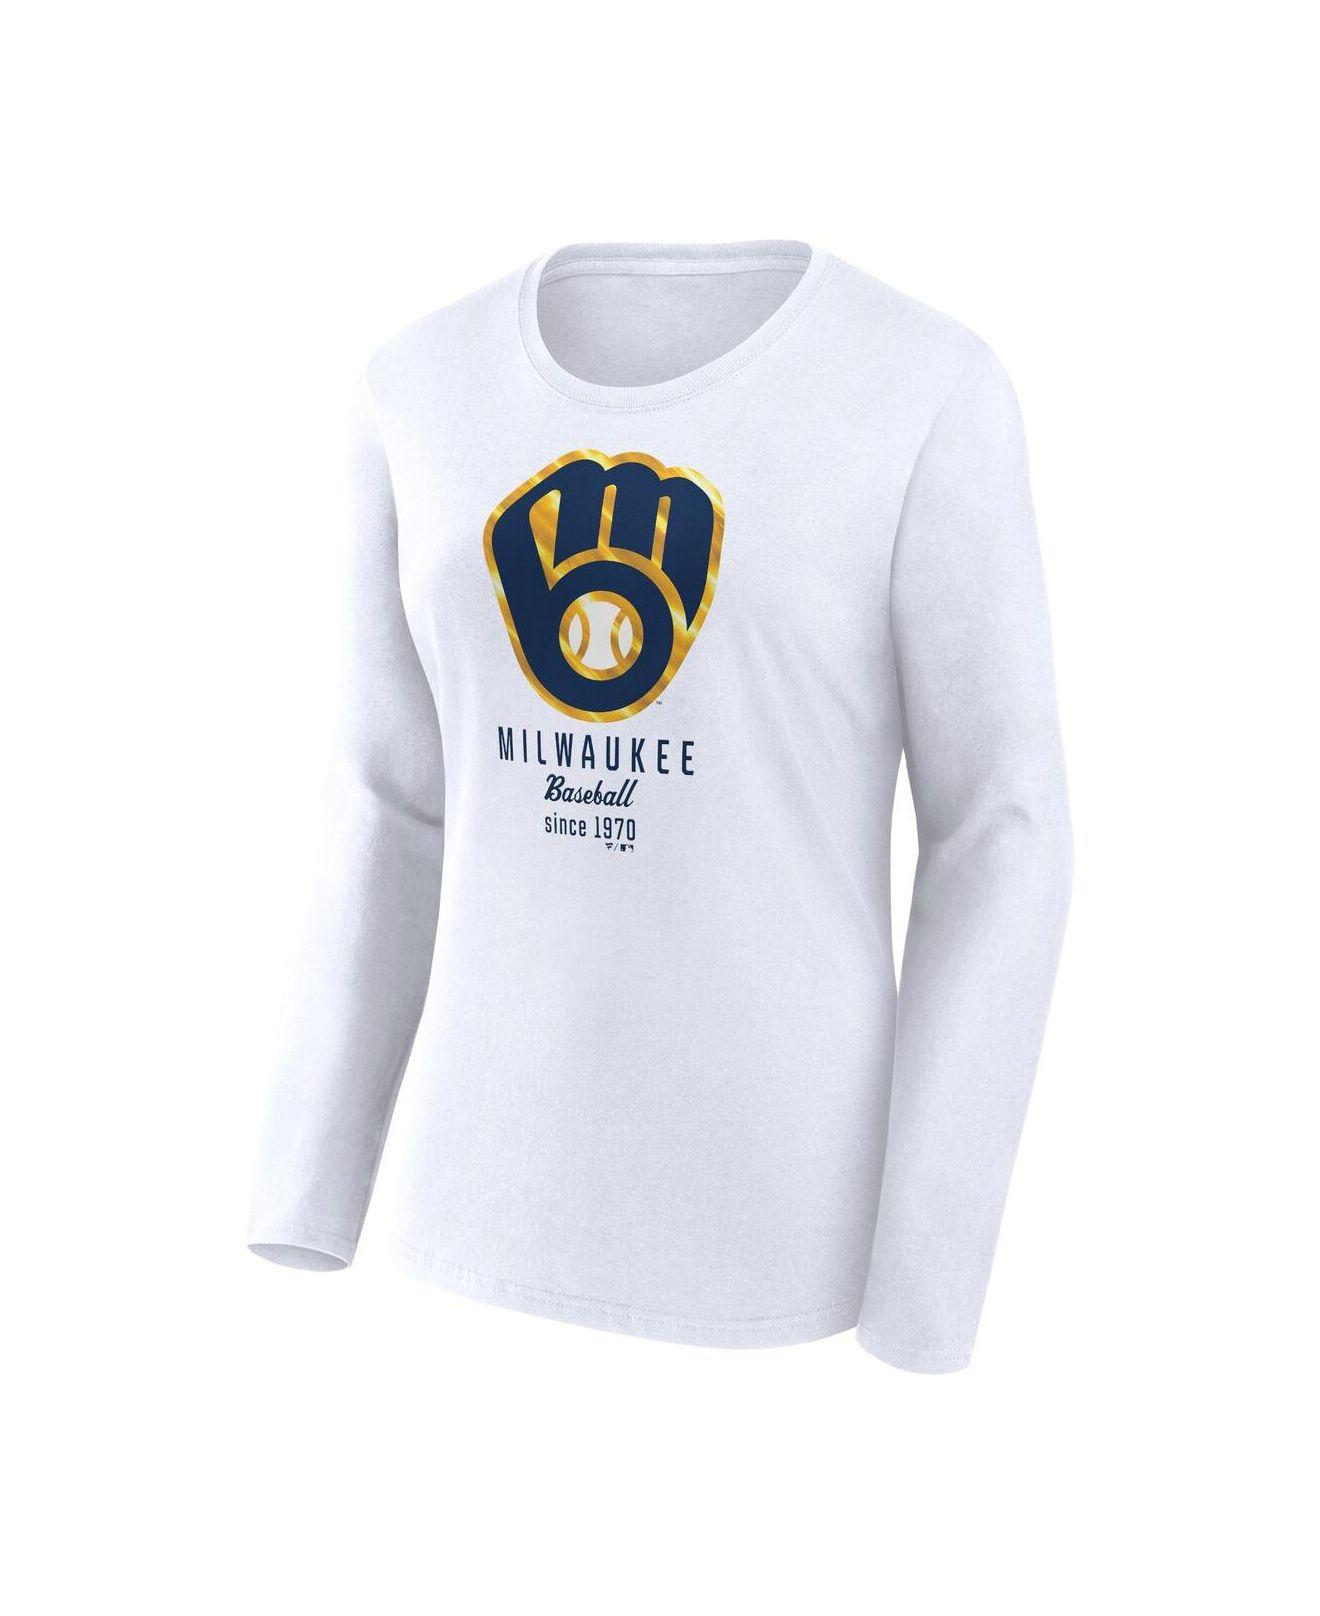 Fanatics Branded White Milwaukee Brewers Long Sleeve T-shirt